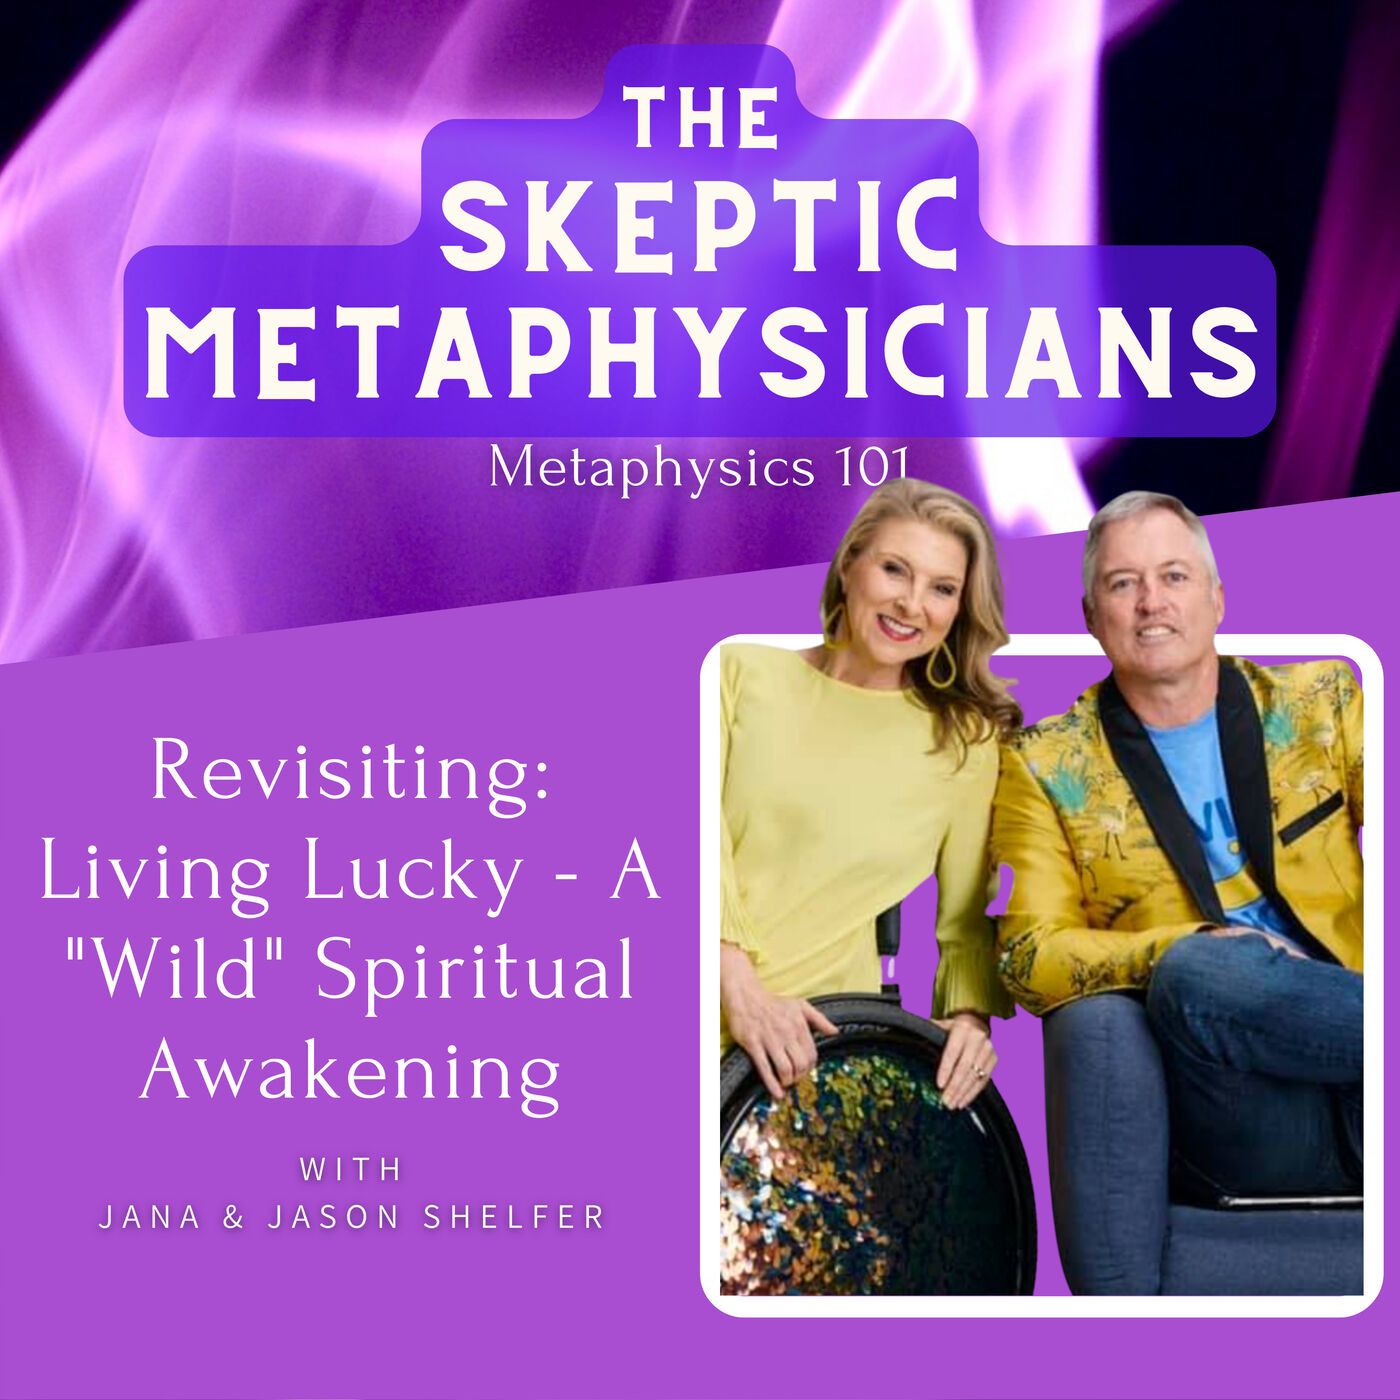 Revisiting: Living Lucky - A "Wild" Spiritual Awakening | Jana and Jason Shelfer Image